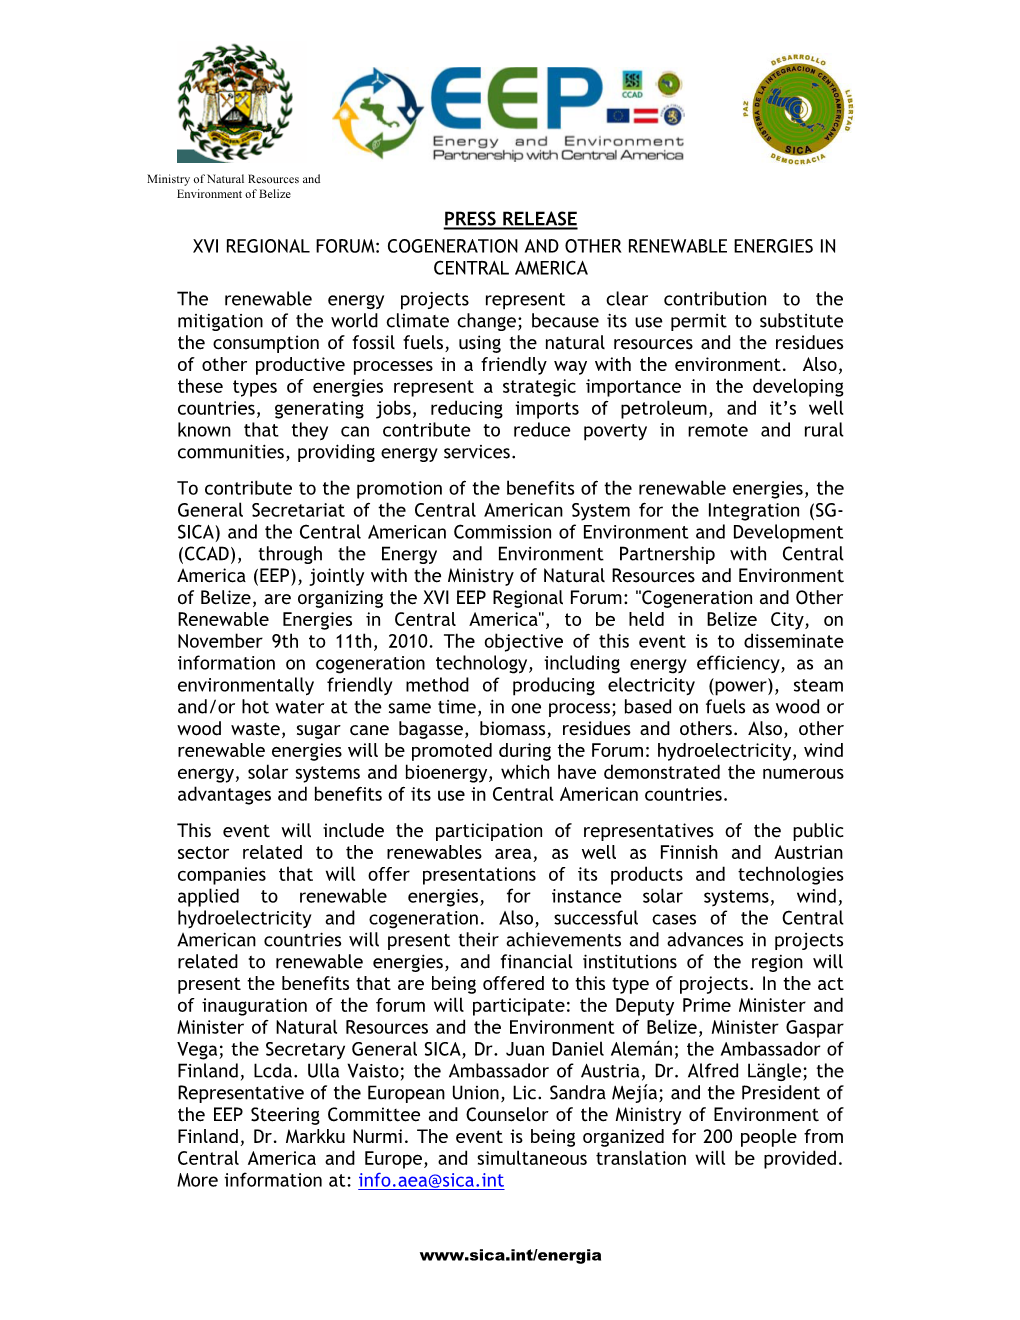 Press Release Xvi Regional Forum: Cogeneration And